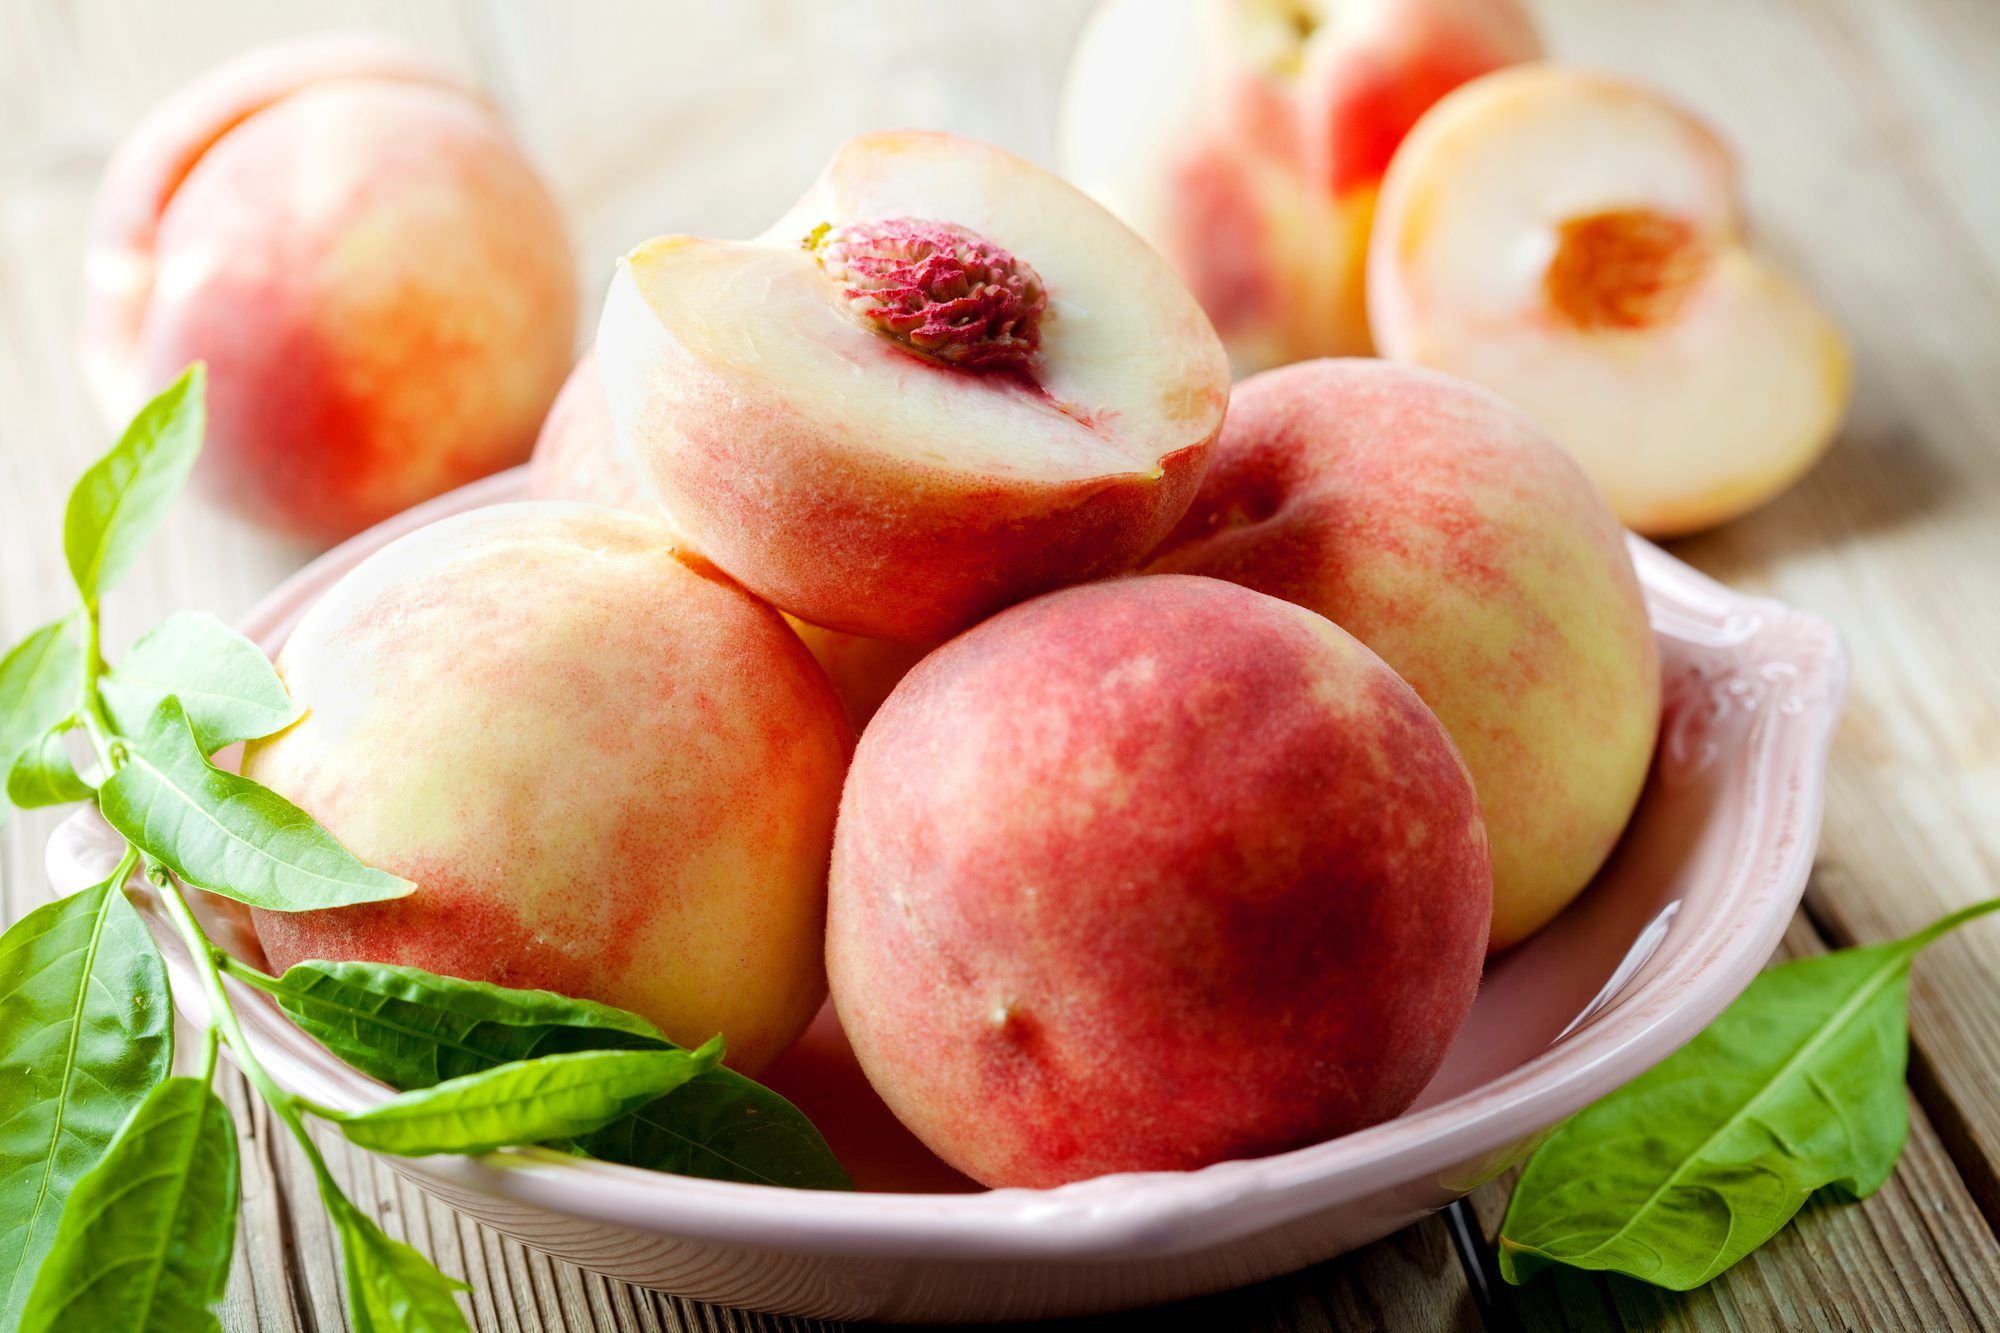 Fresh peaches regarding the Canada recall after salmonella outbreak 